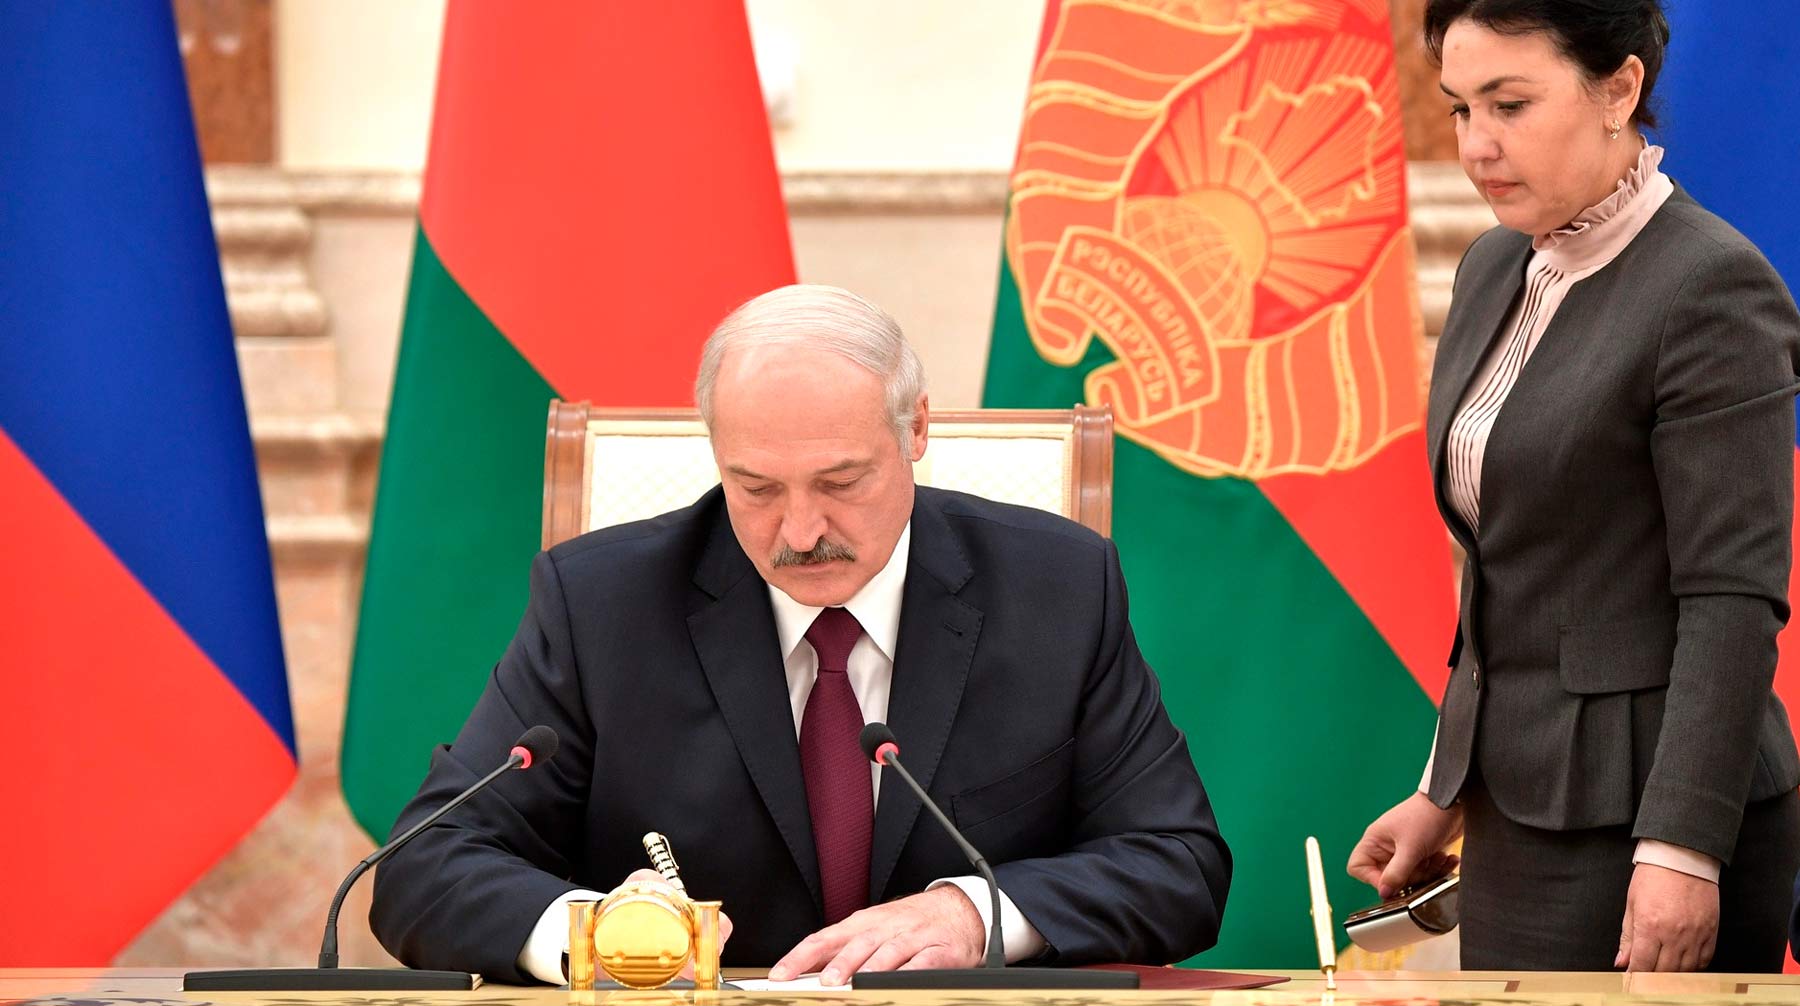 Решение президента связано с предстоящими выборами главы государства Фото: © Kremlin Pool